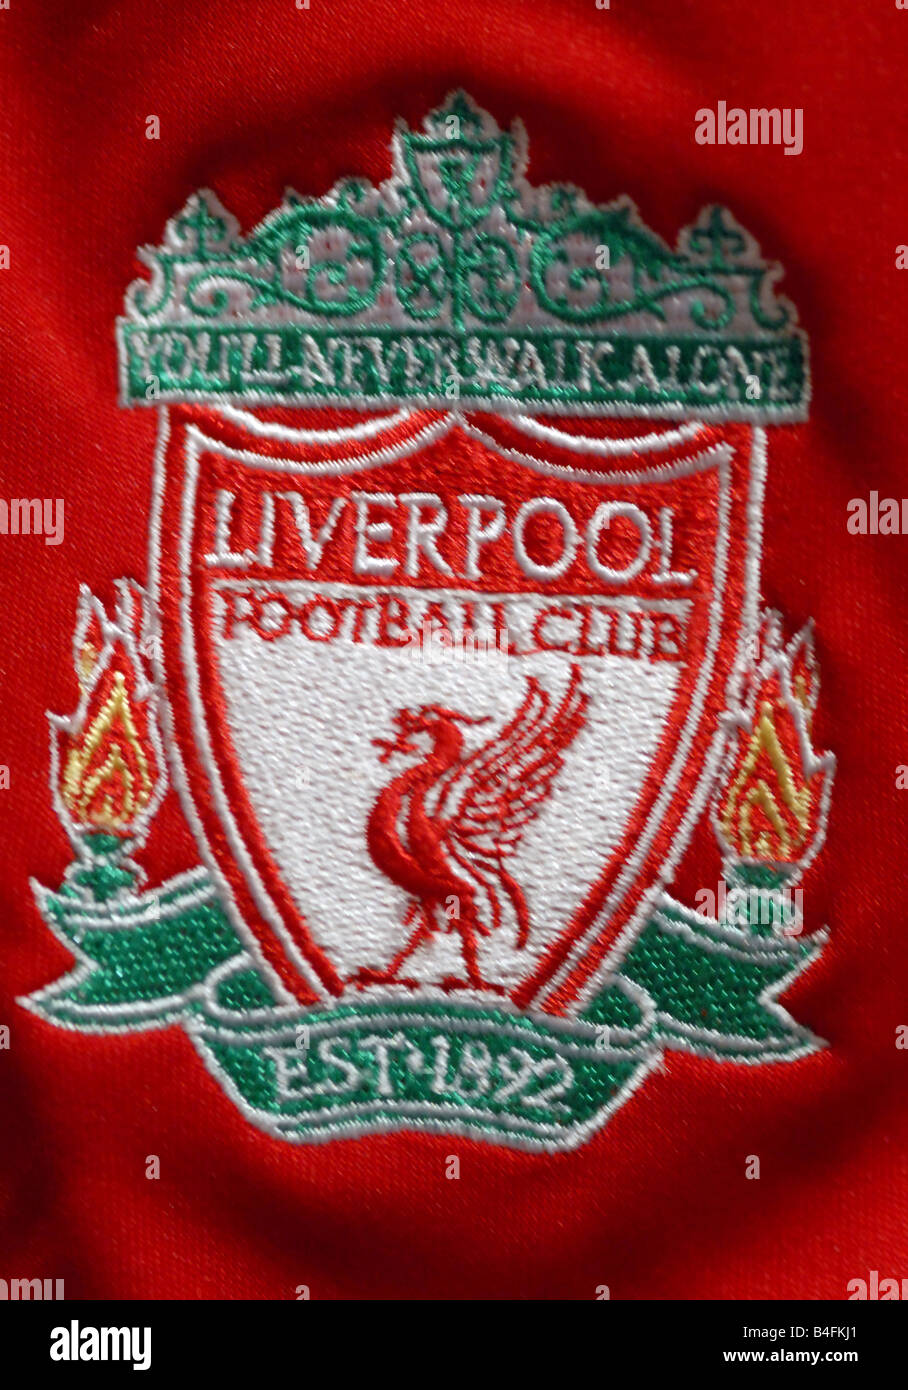 Liverpool F.C Football Club Badge Crest Stock Photo